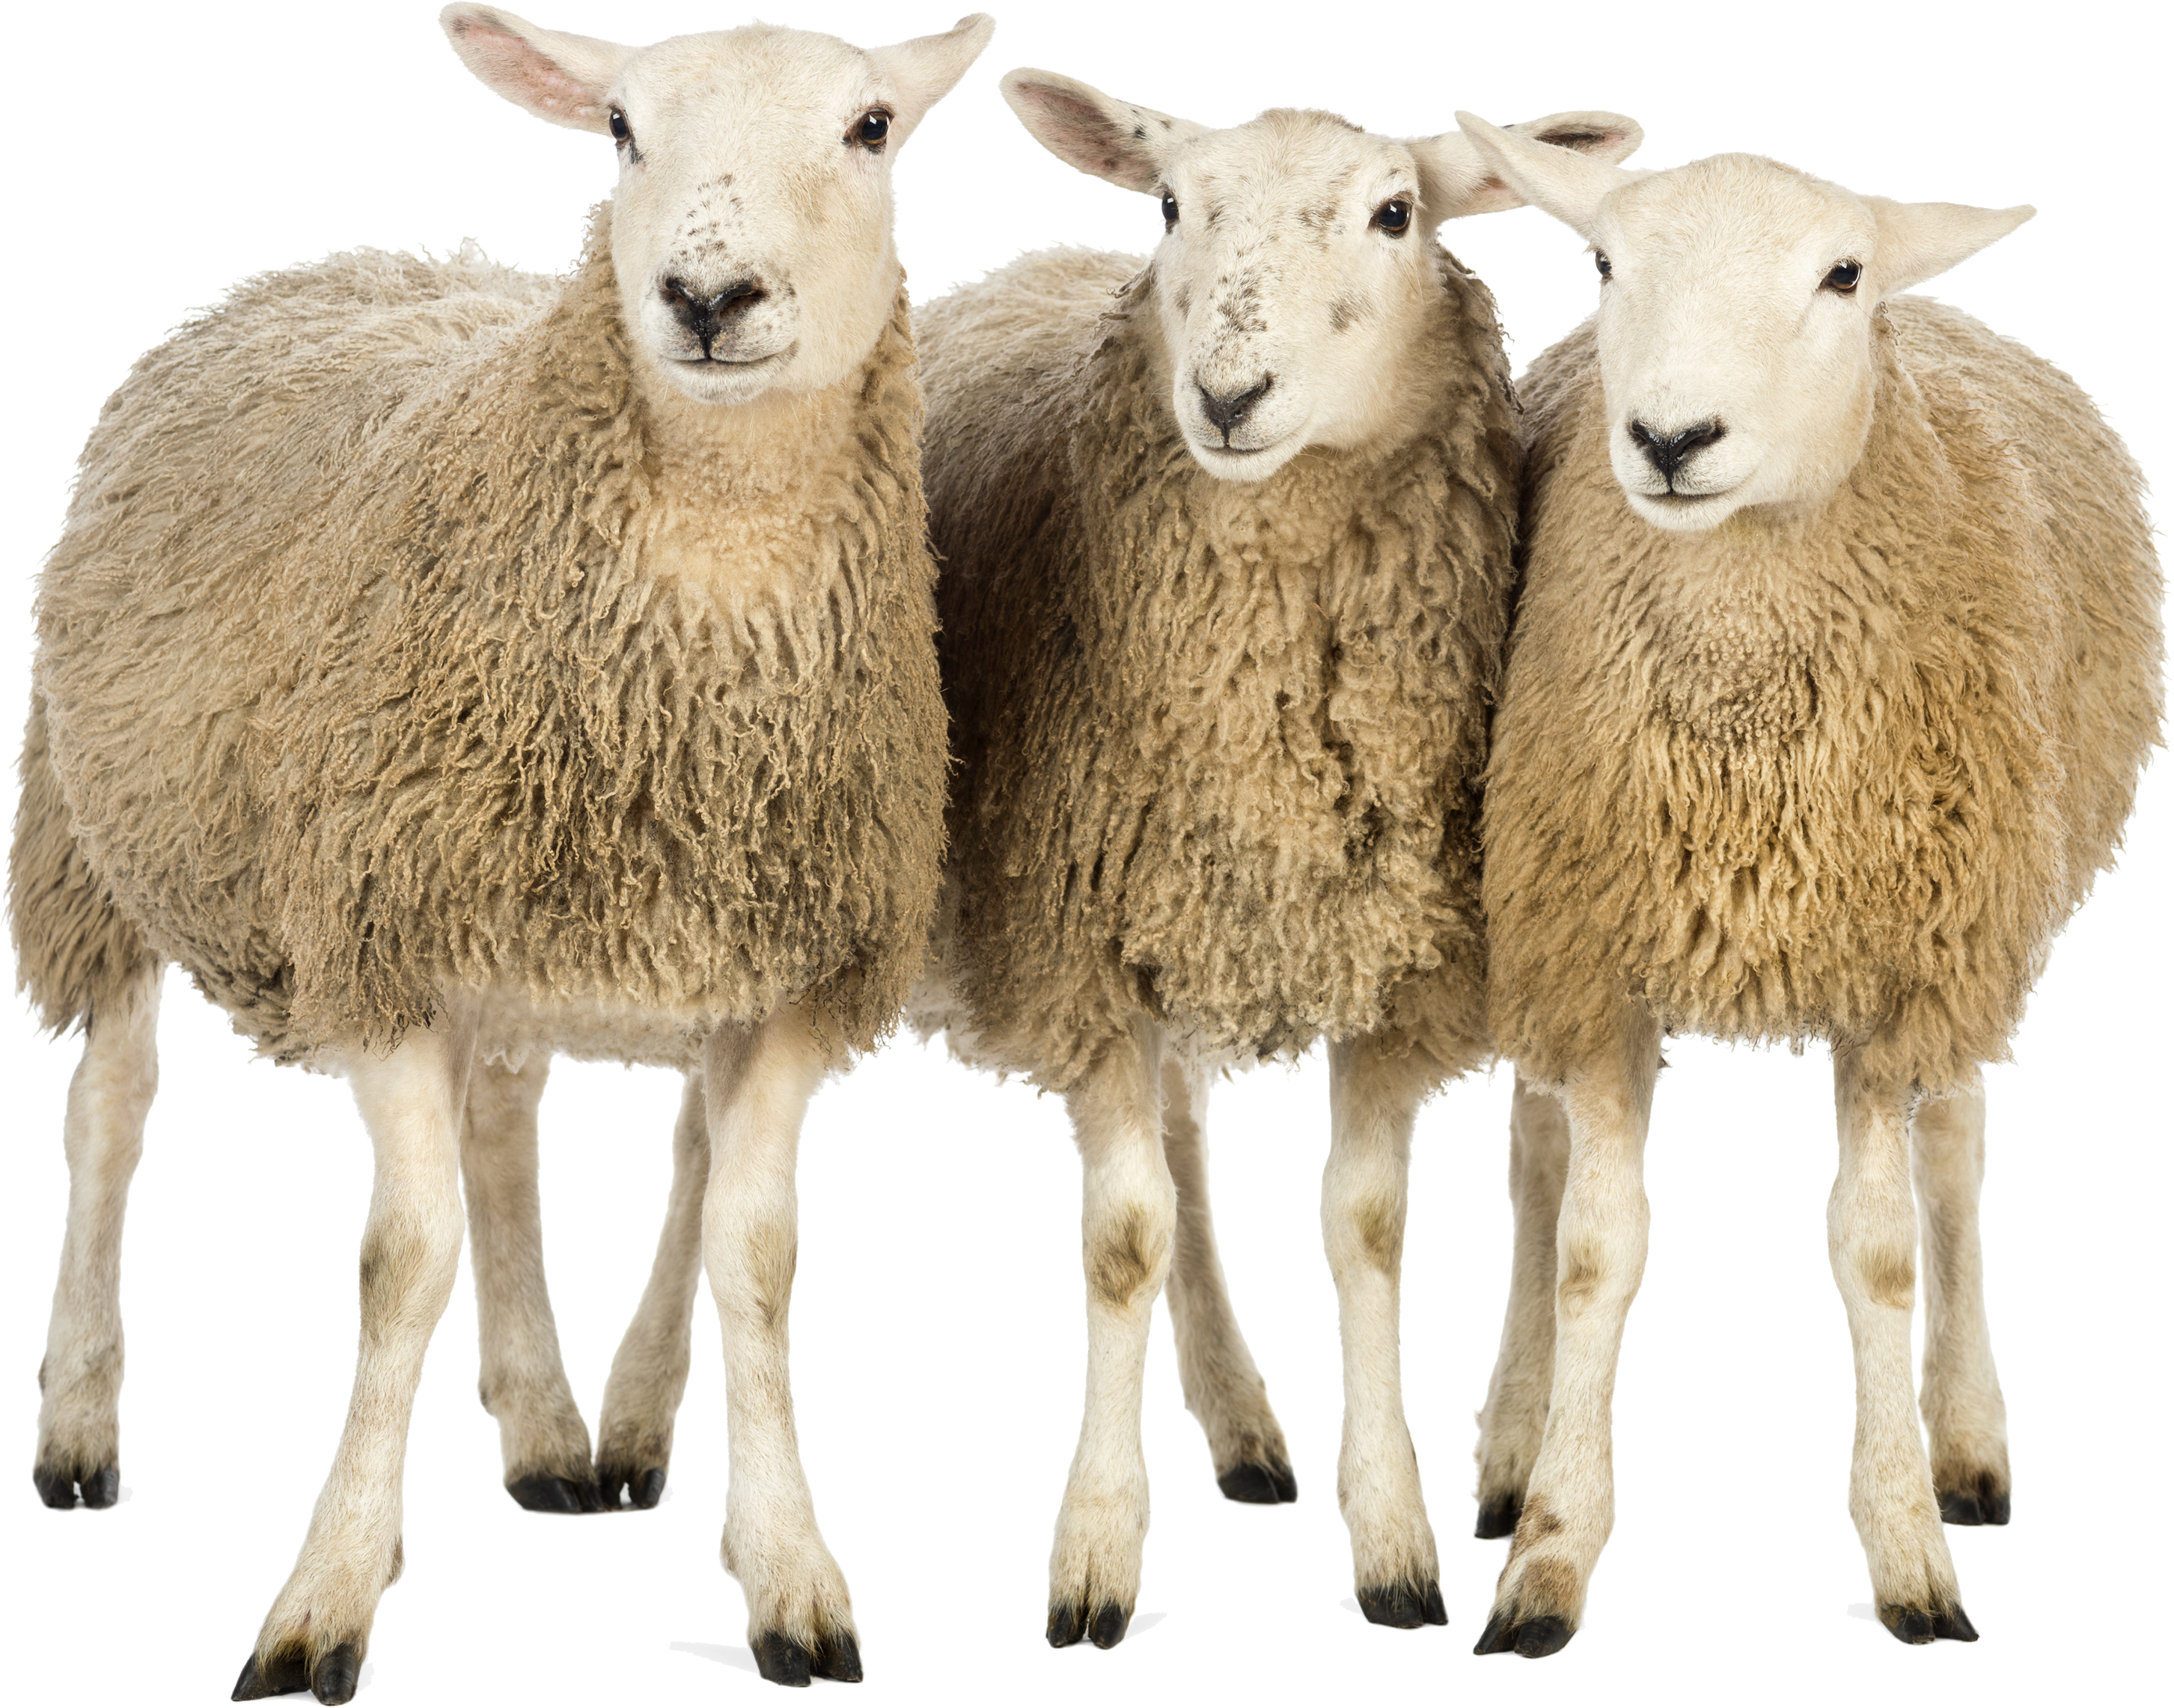 Tres ovelhas